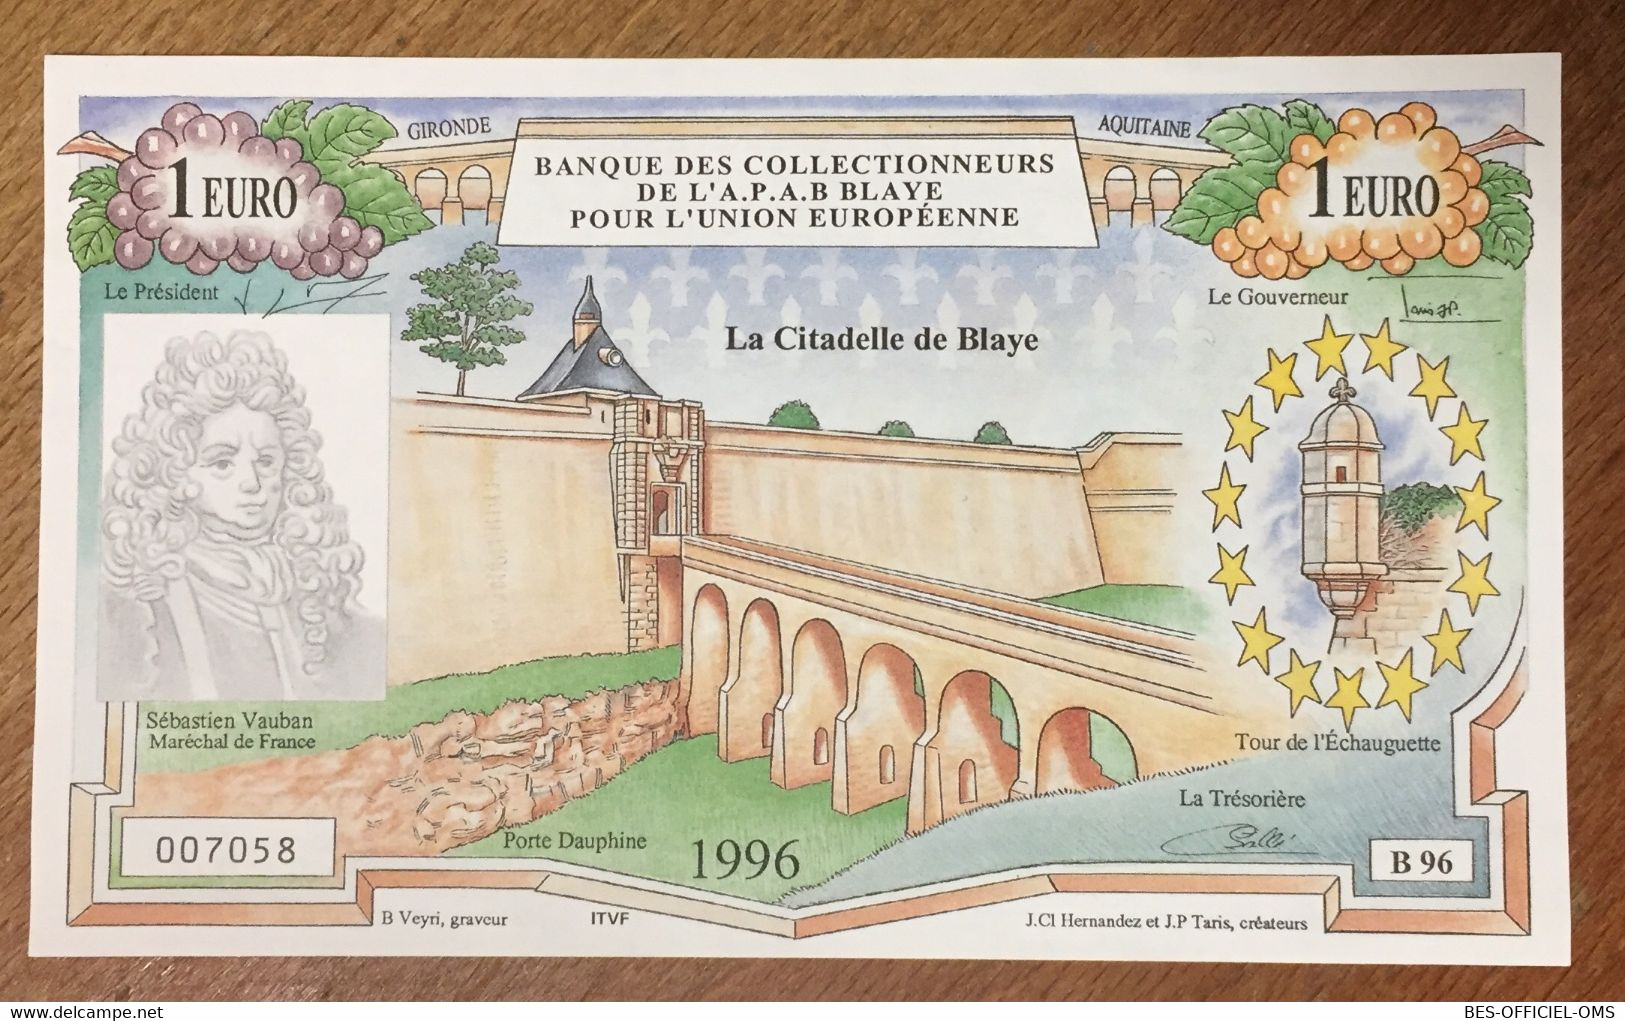 BILLET 1 EURO SOUVENIR BLAYE 1996 BNP 7 FRANCS EURO SCHEIN PAPER MONEY BANKNOTE PAPER LOCAL CURRENCY - Privatentwürfe